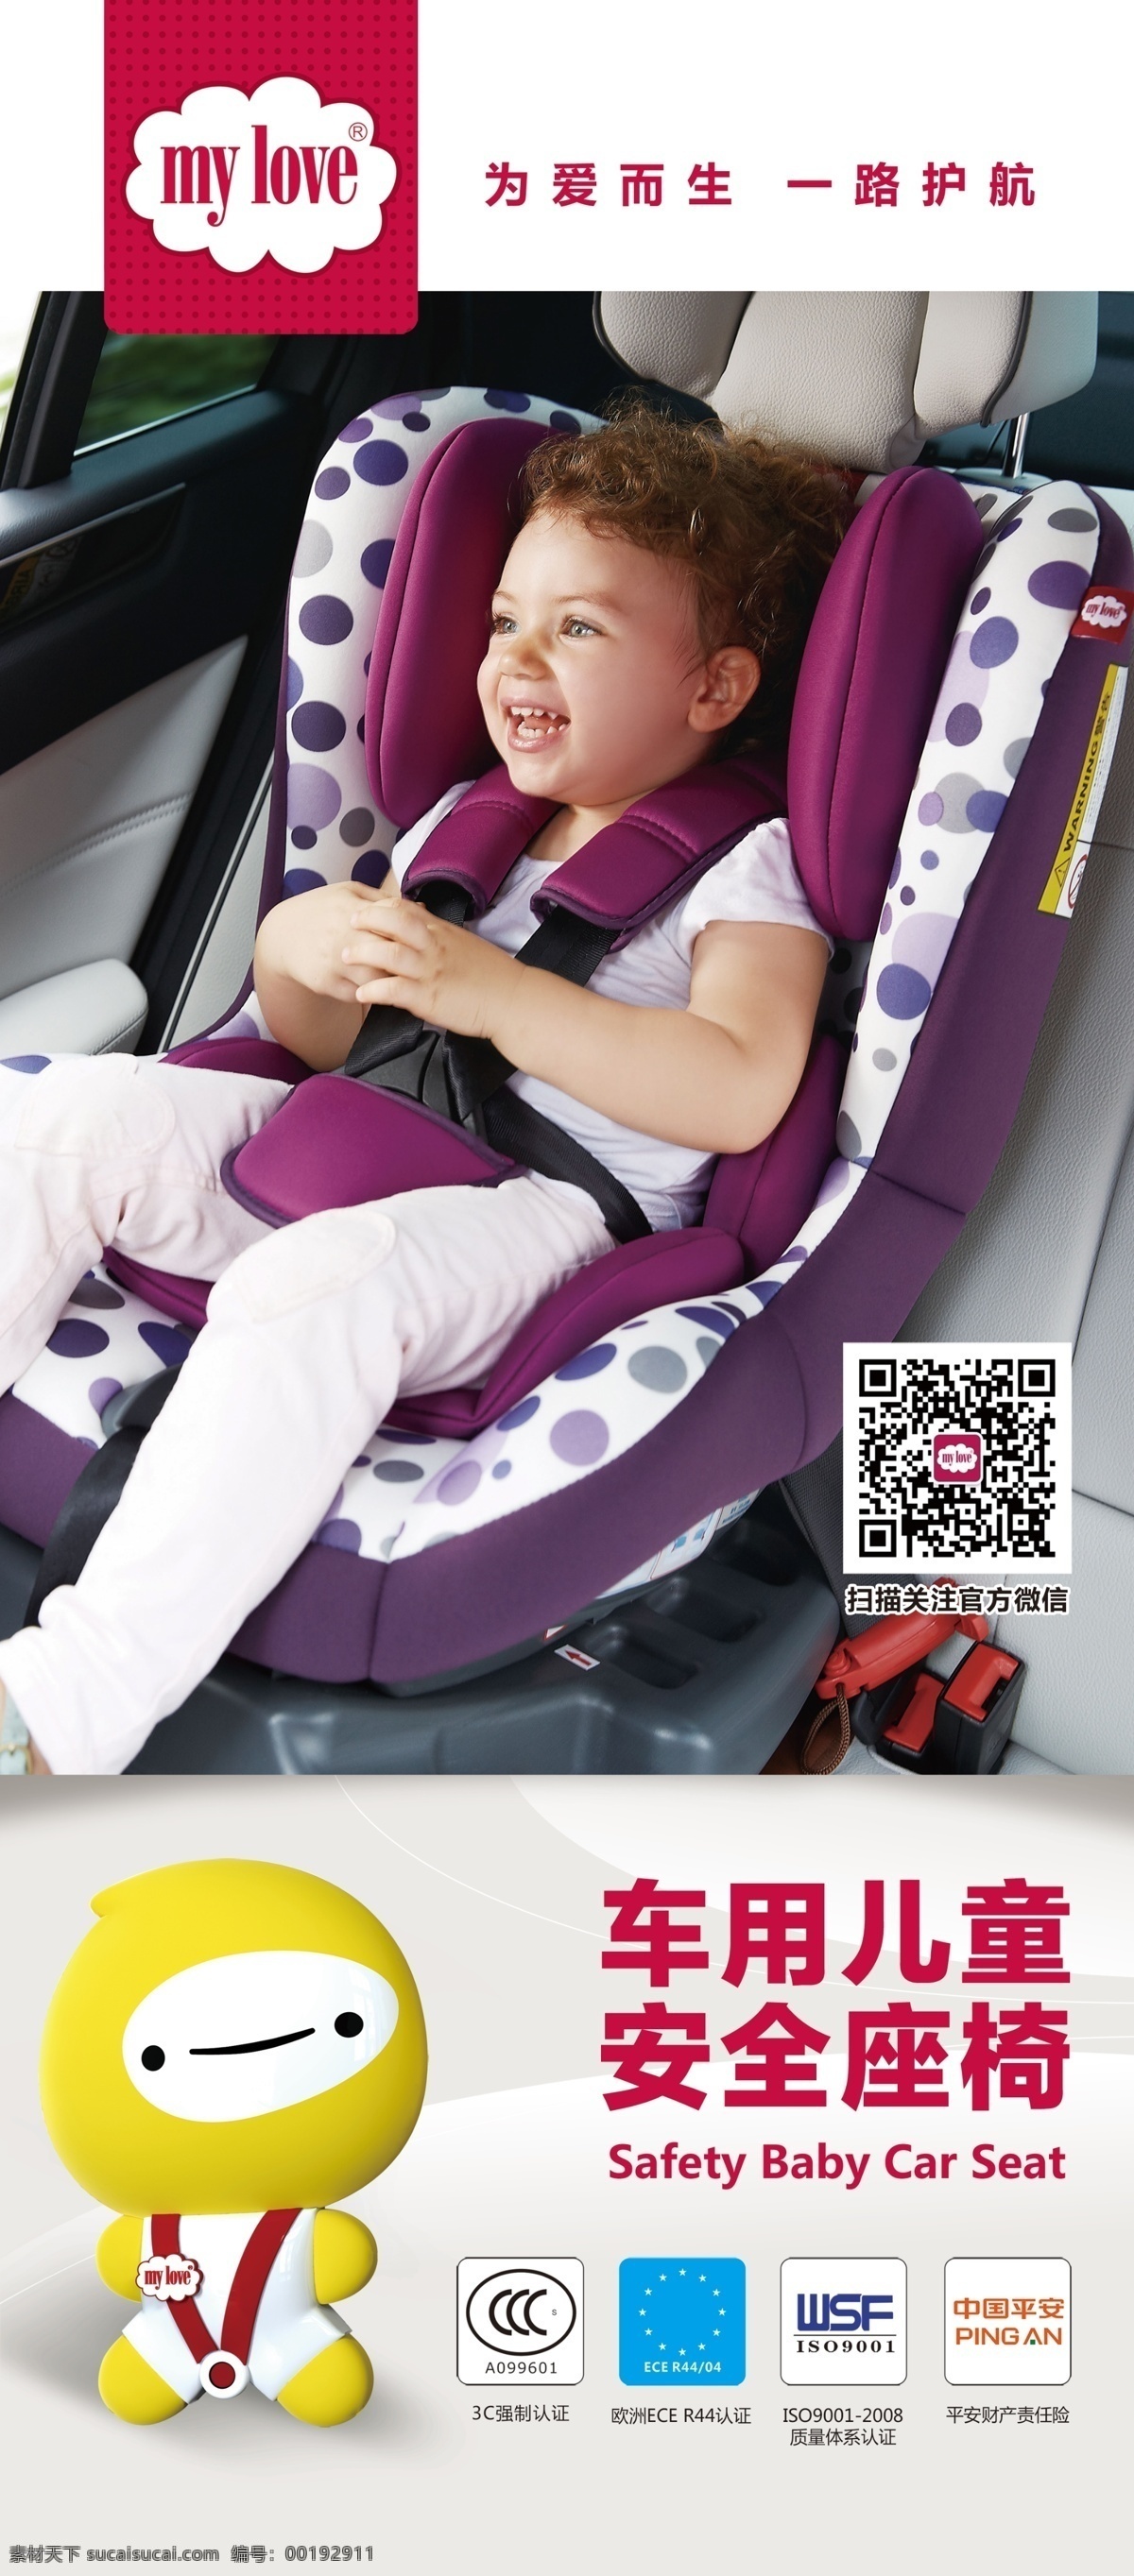 mylove 车用 儿童安全 座椅 海报 x 展架 x展架 原创 设计稿 汽车 宝宝座椅 宣传海报 车载婴儿座椅 儿童出行安全 白色